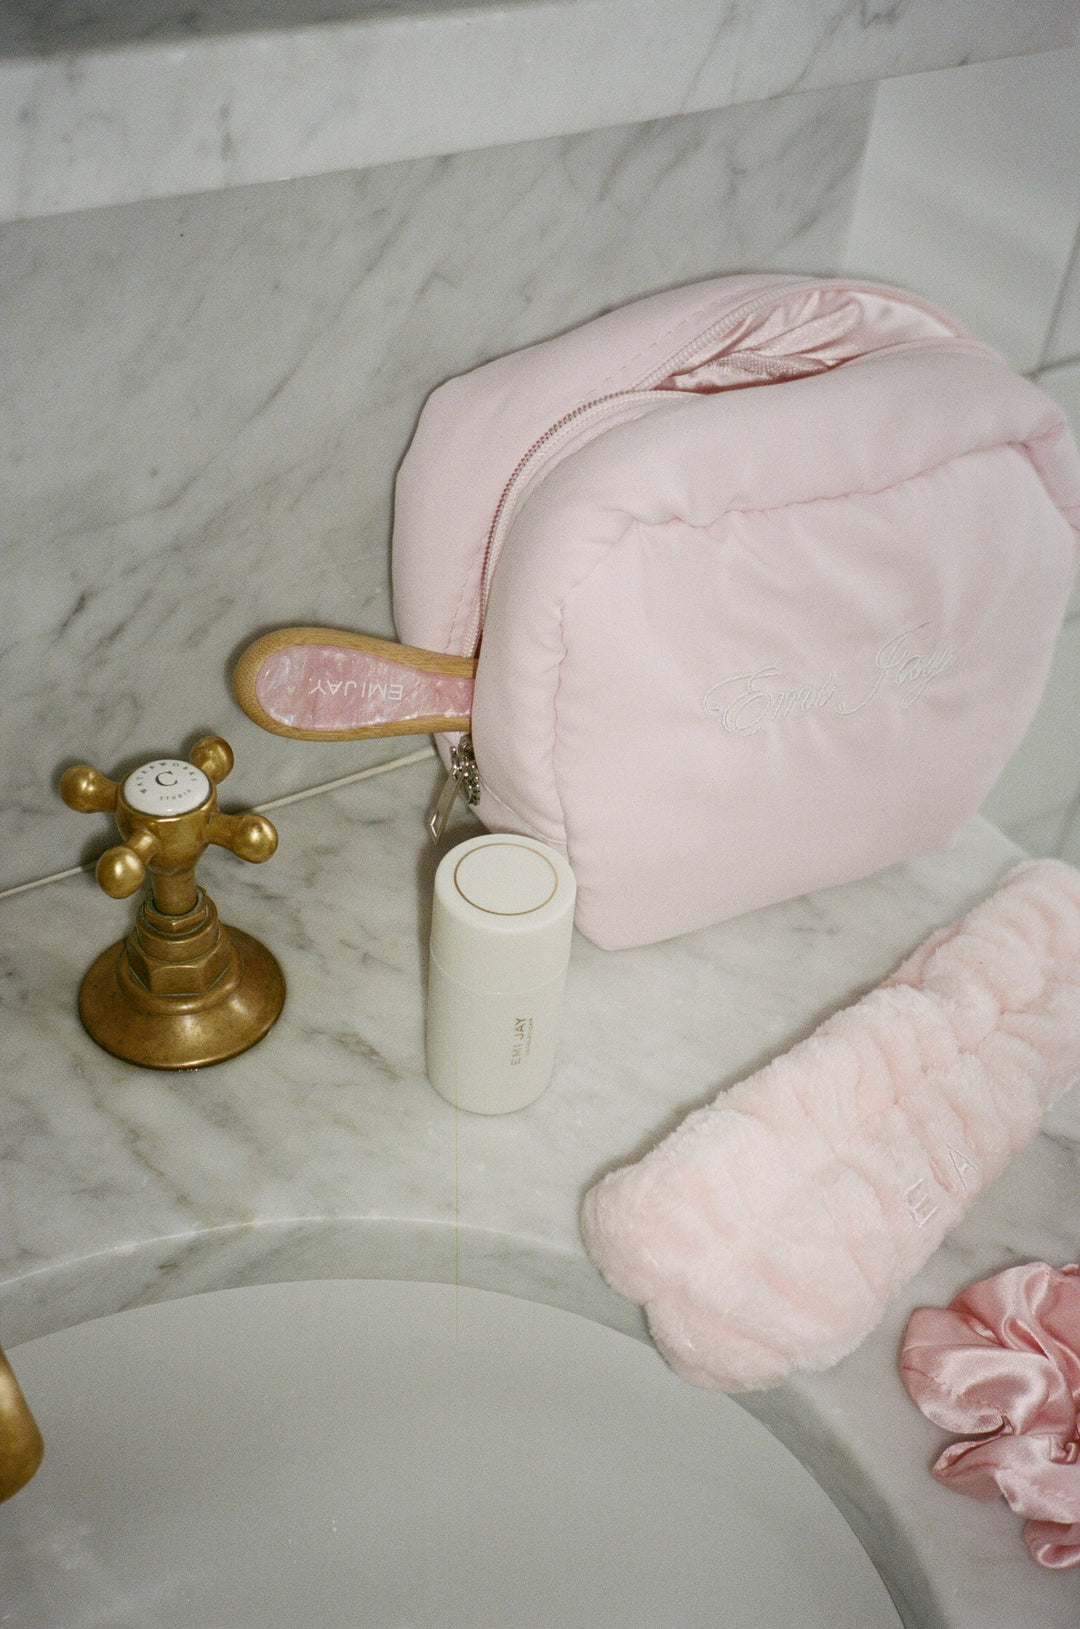 angelstick on sink next to angelstick pouch, cloud headband, silk scrunchie, and flat brush in pink sugar